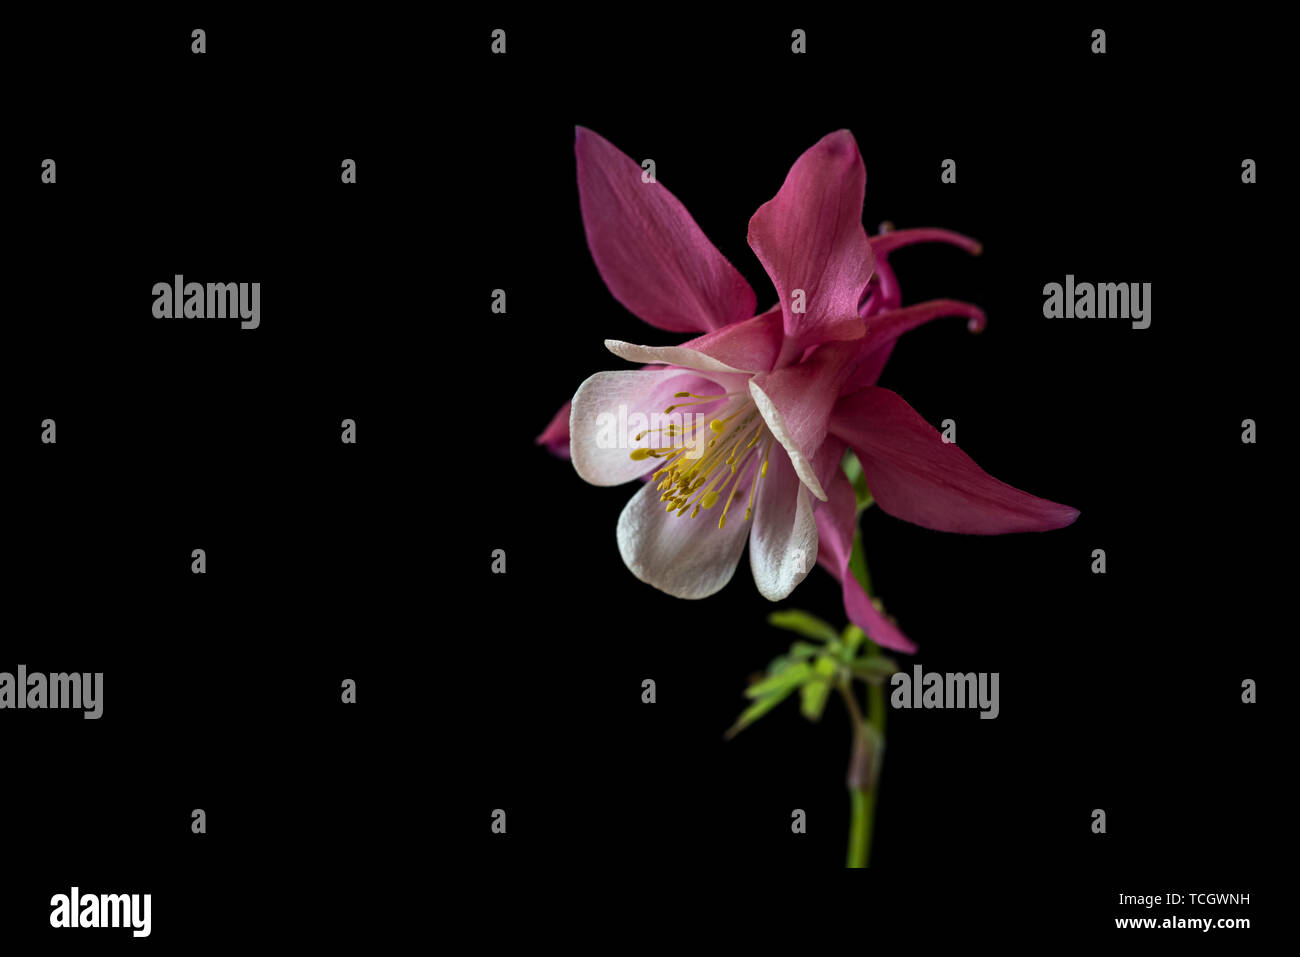 Aquilegia Spring Magic Rose and White,spring magic series,Ranunculaceae,low key life science, black background Stock Photo